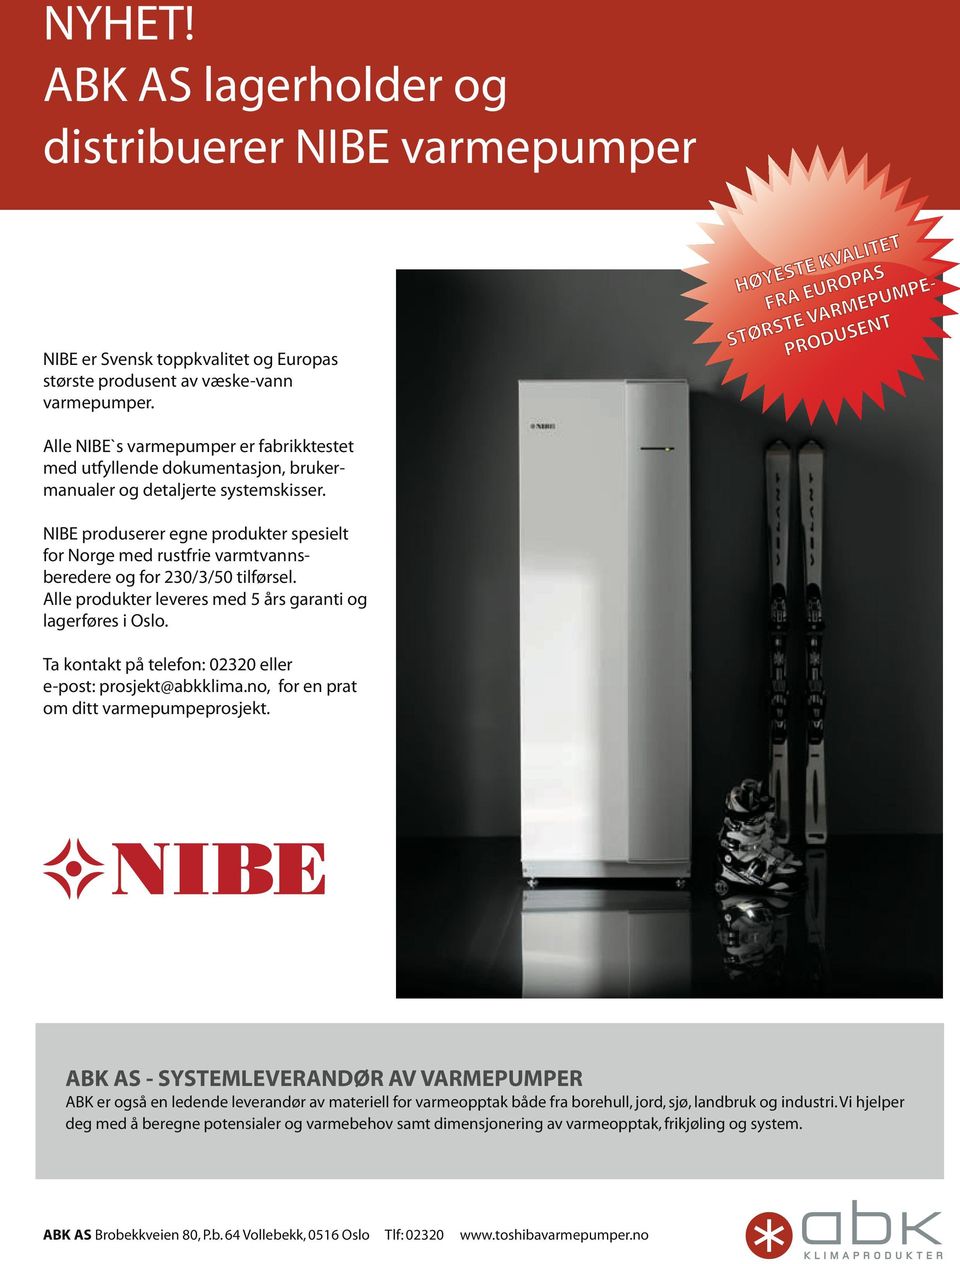 NIBE produserer egne produkter spesielt for Norge med rustfrie varmtvannsberedere og for 230/3/50 tilførsel. Alle produkter leveres med 5 års garanti og lagerføres i Oslo.